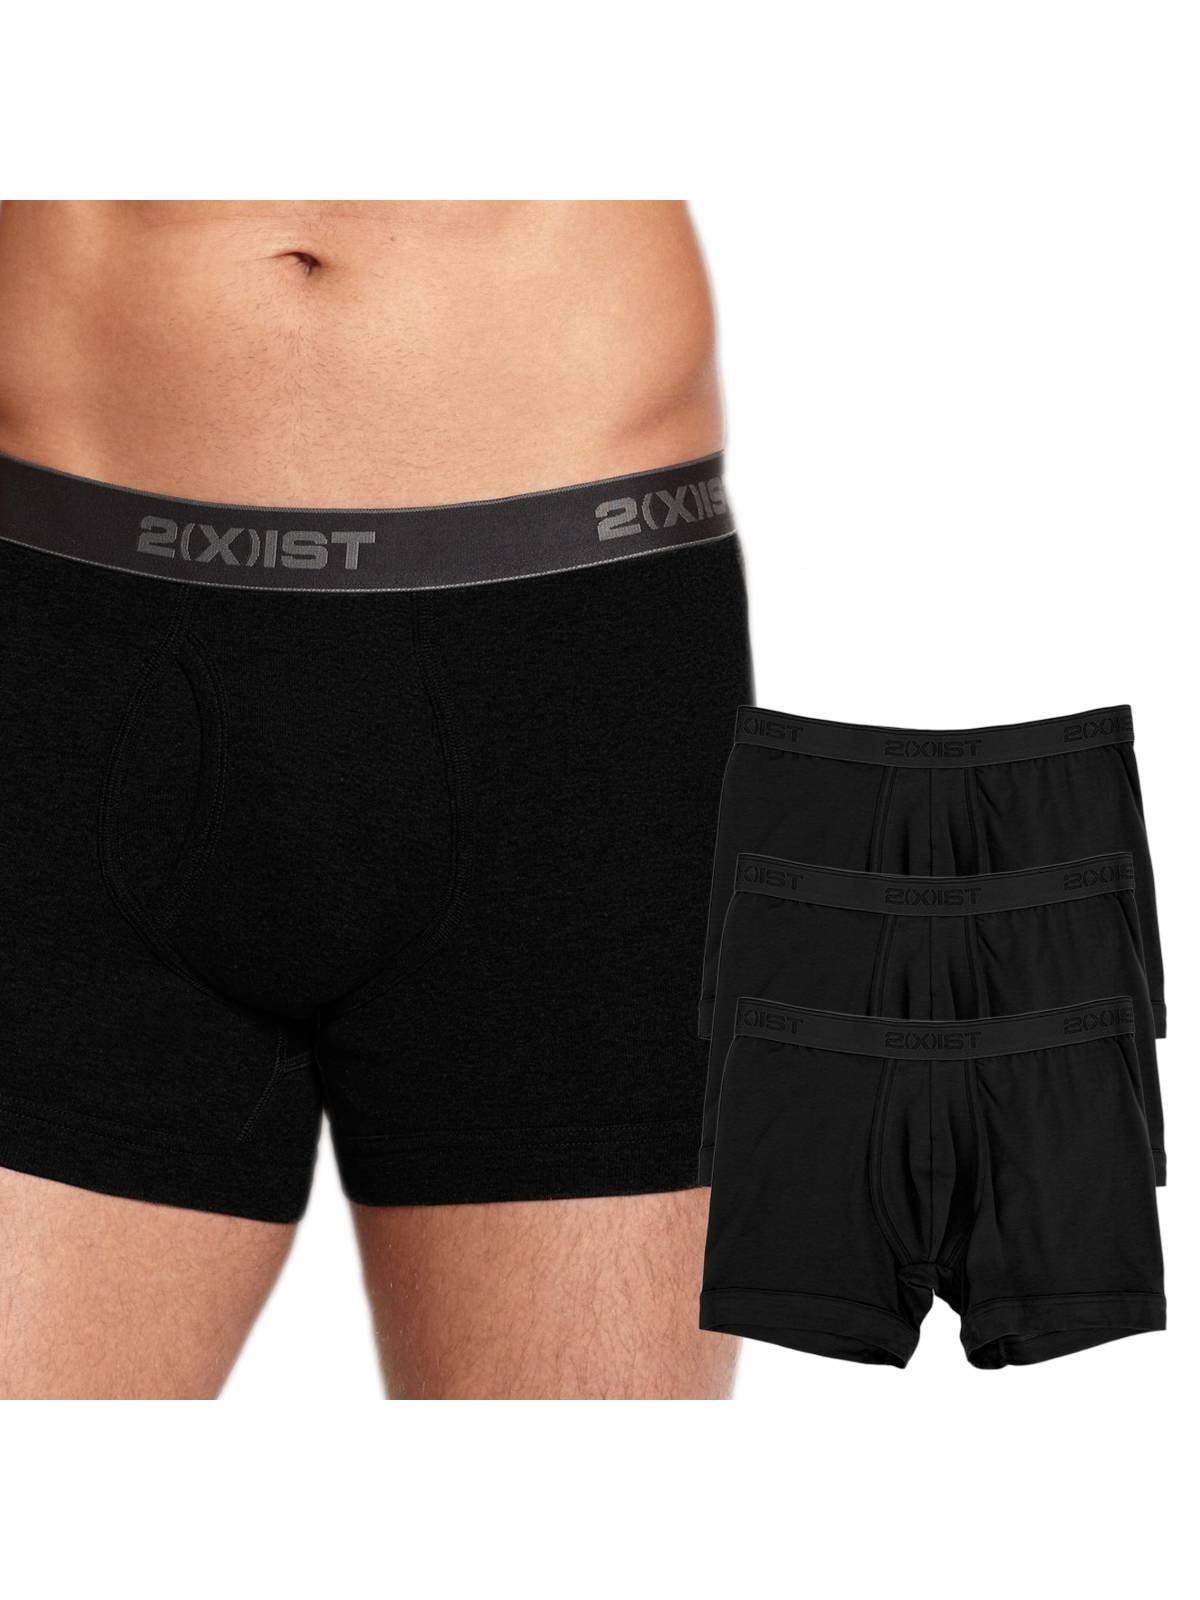 CATSDER Car Boxer Briefs Mens Underwear Pack Seamless Comfort Soft